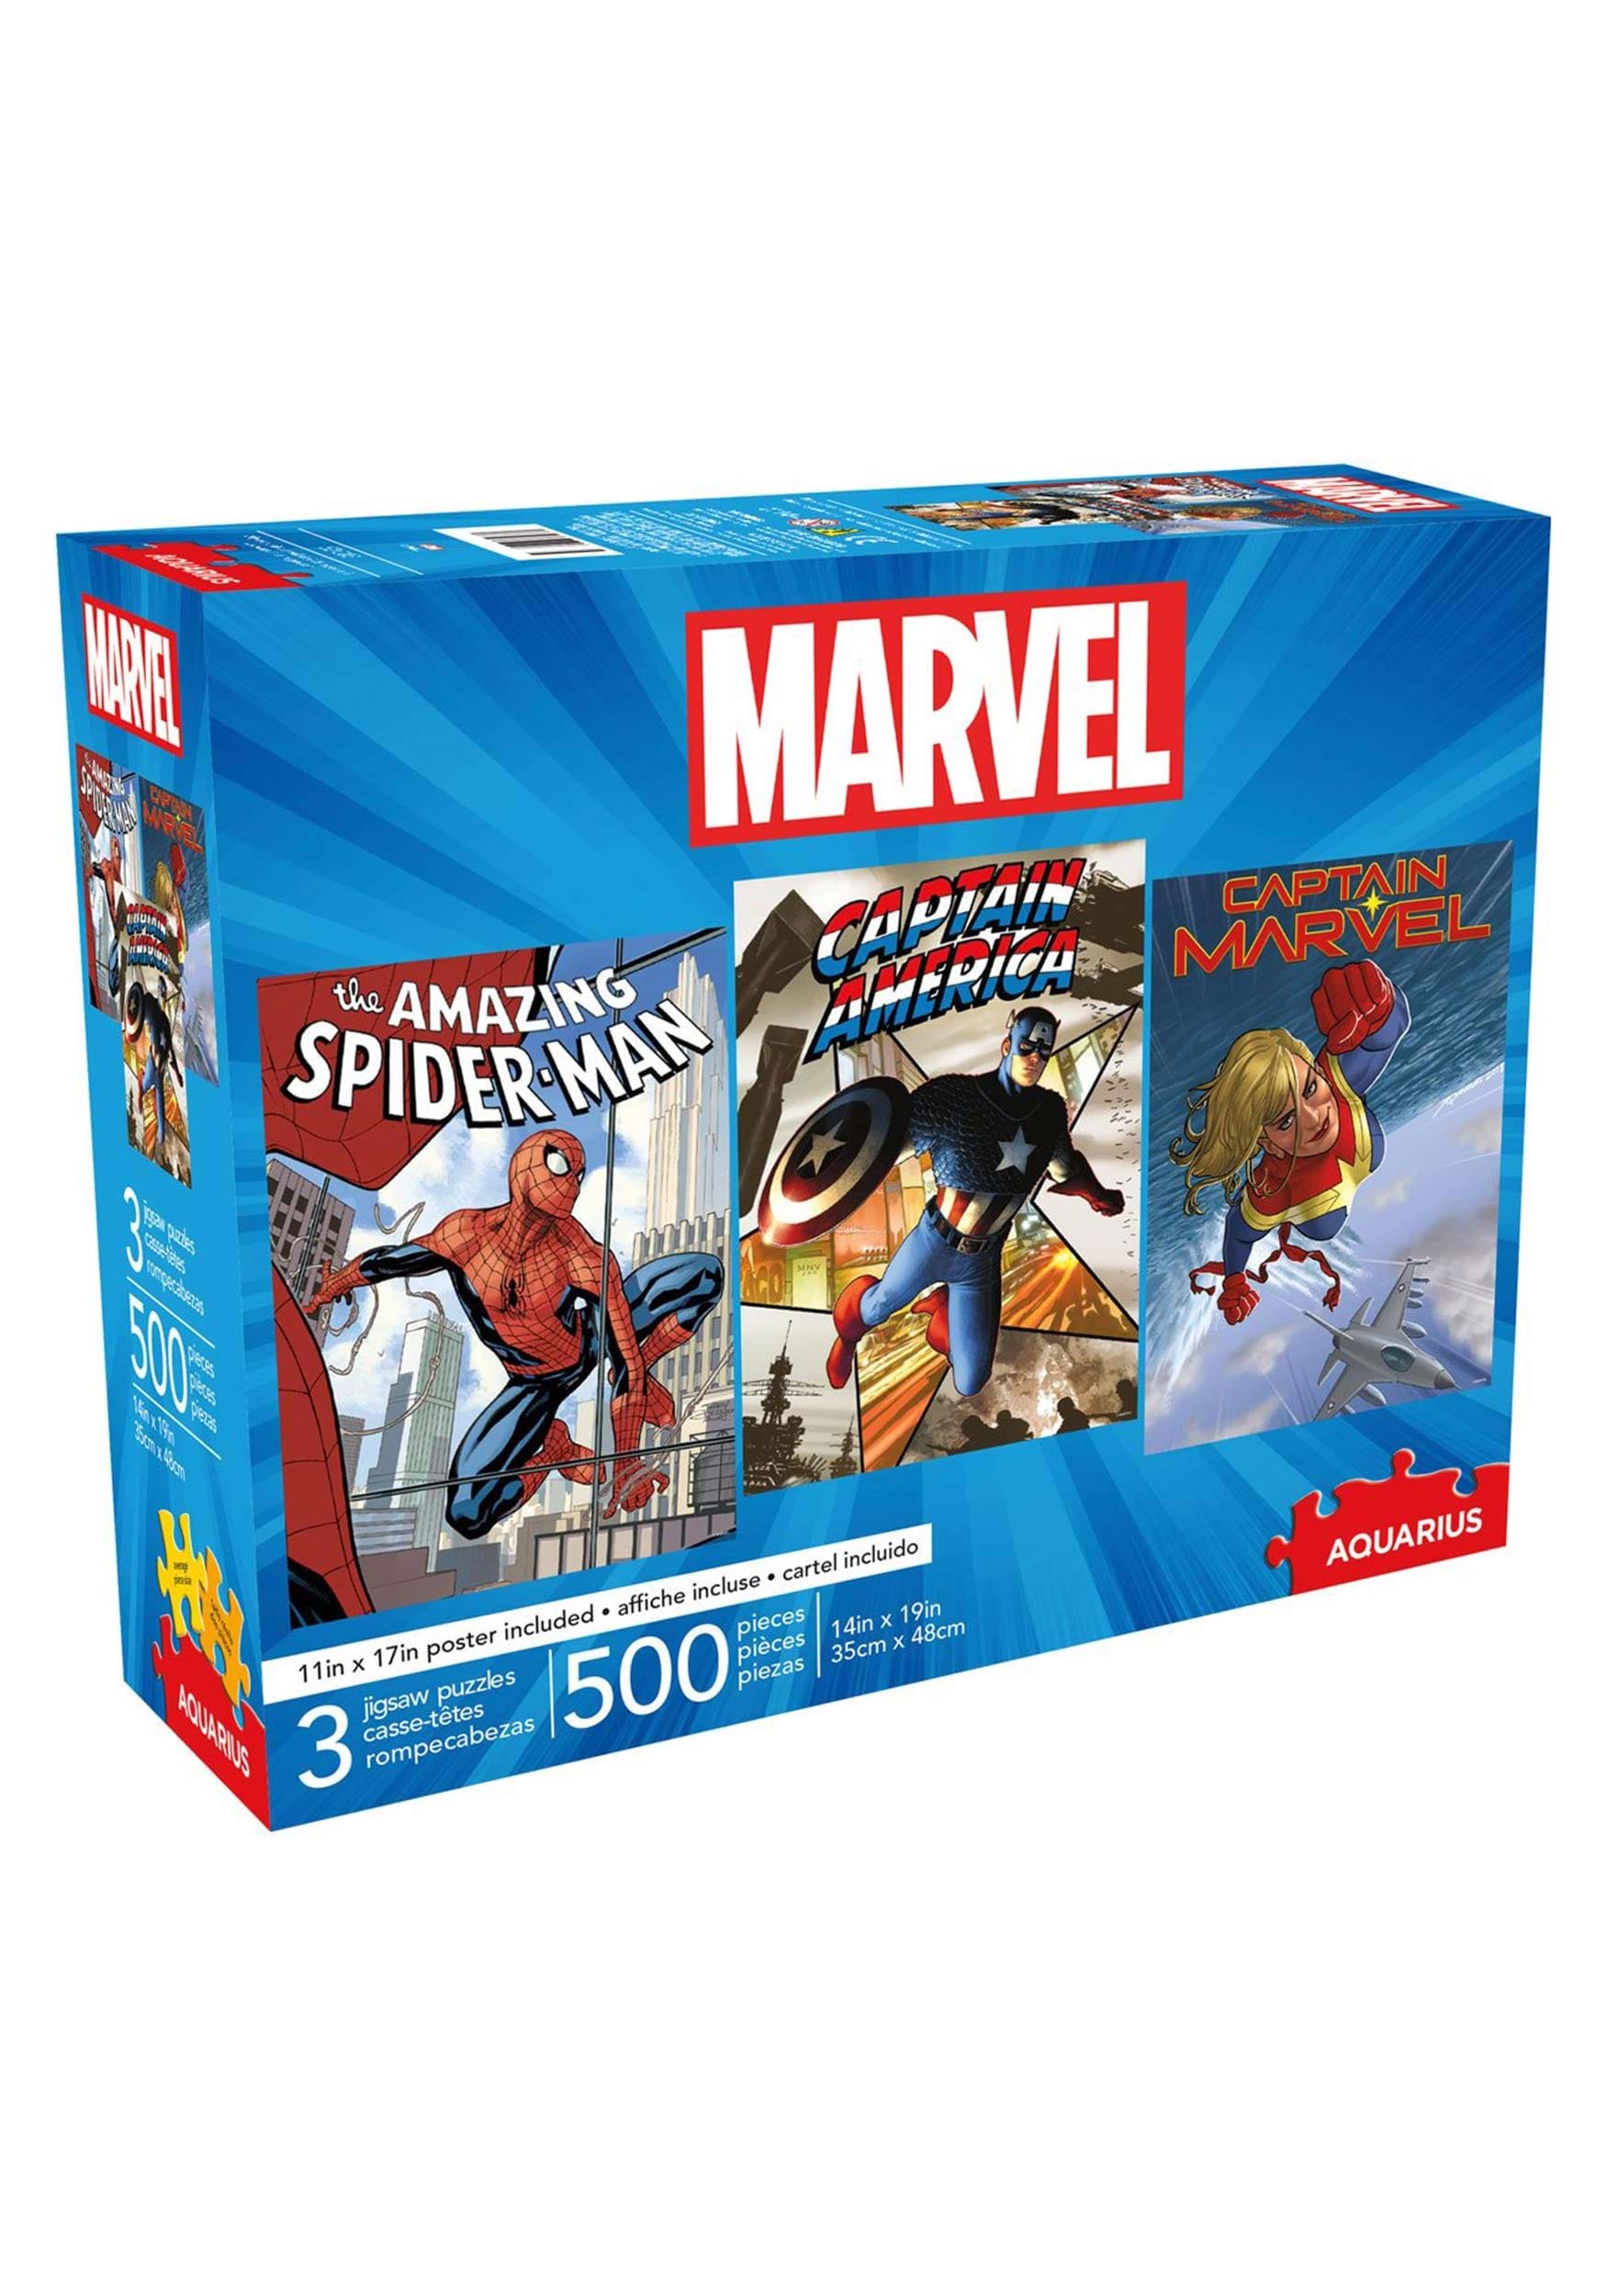 Marvel Spider-Man, Captain America & Captain Marvel 500 Piece Jigsaw Puzzle Set